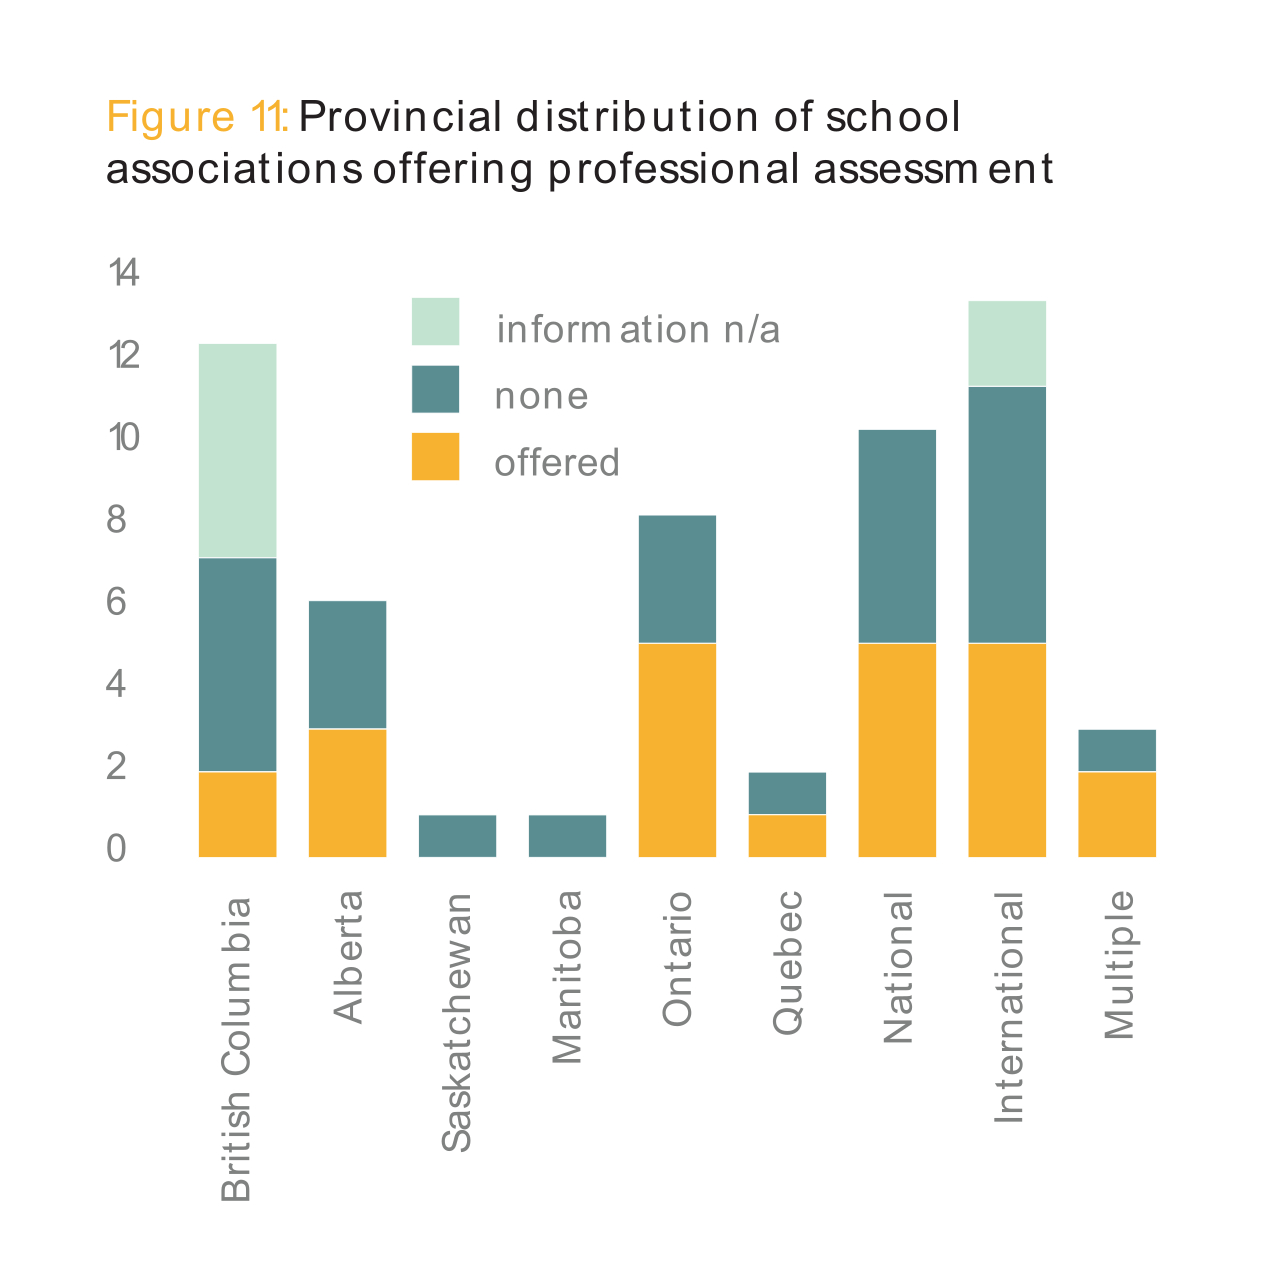 Figure 11: Provincial distribution of school associations offering professional assessment